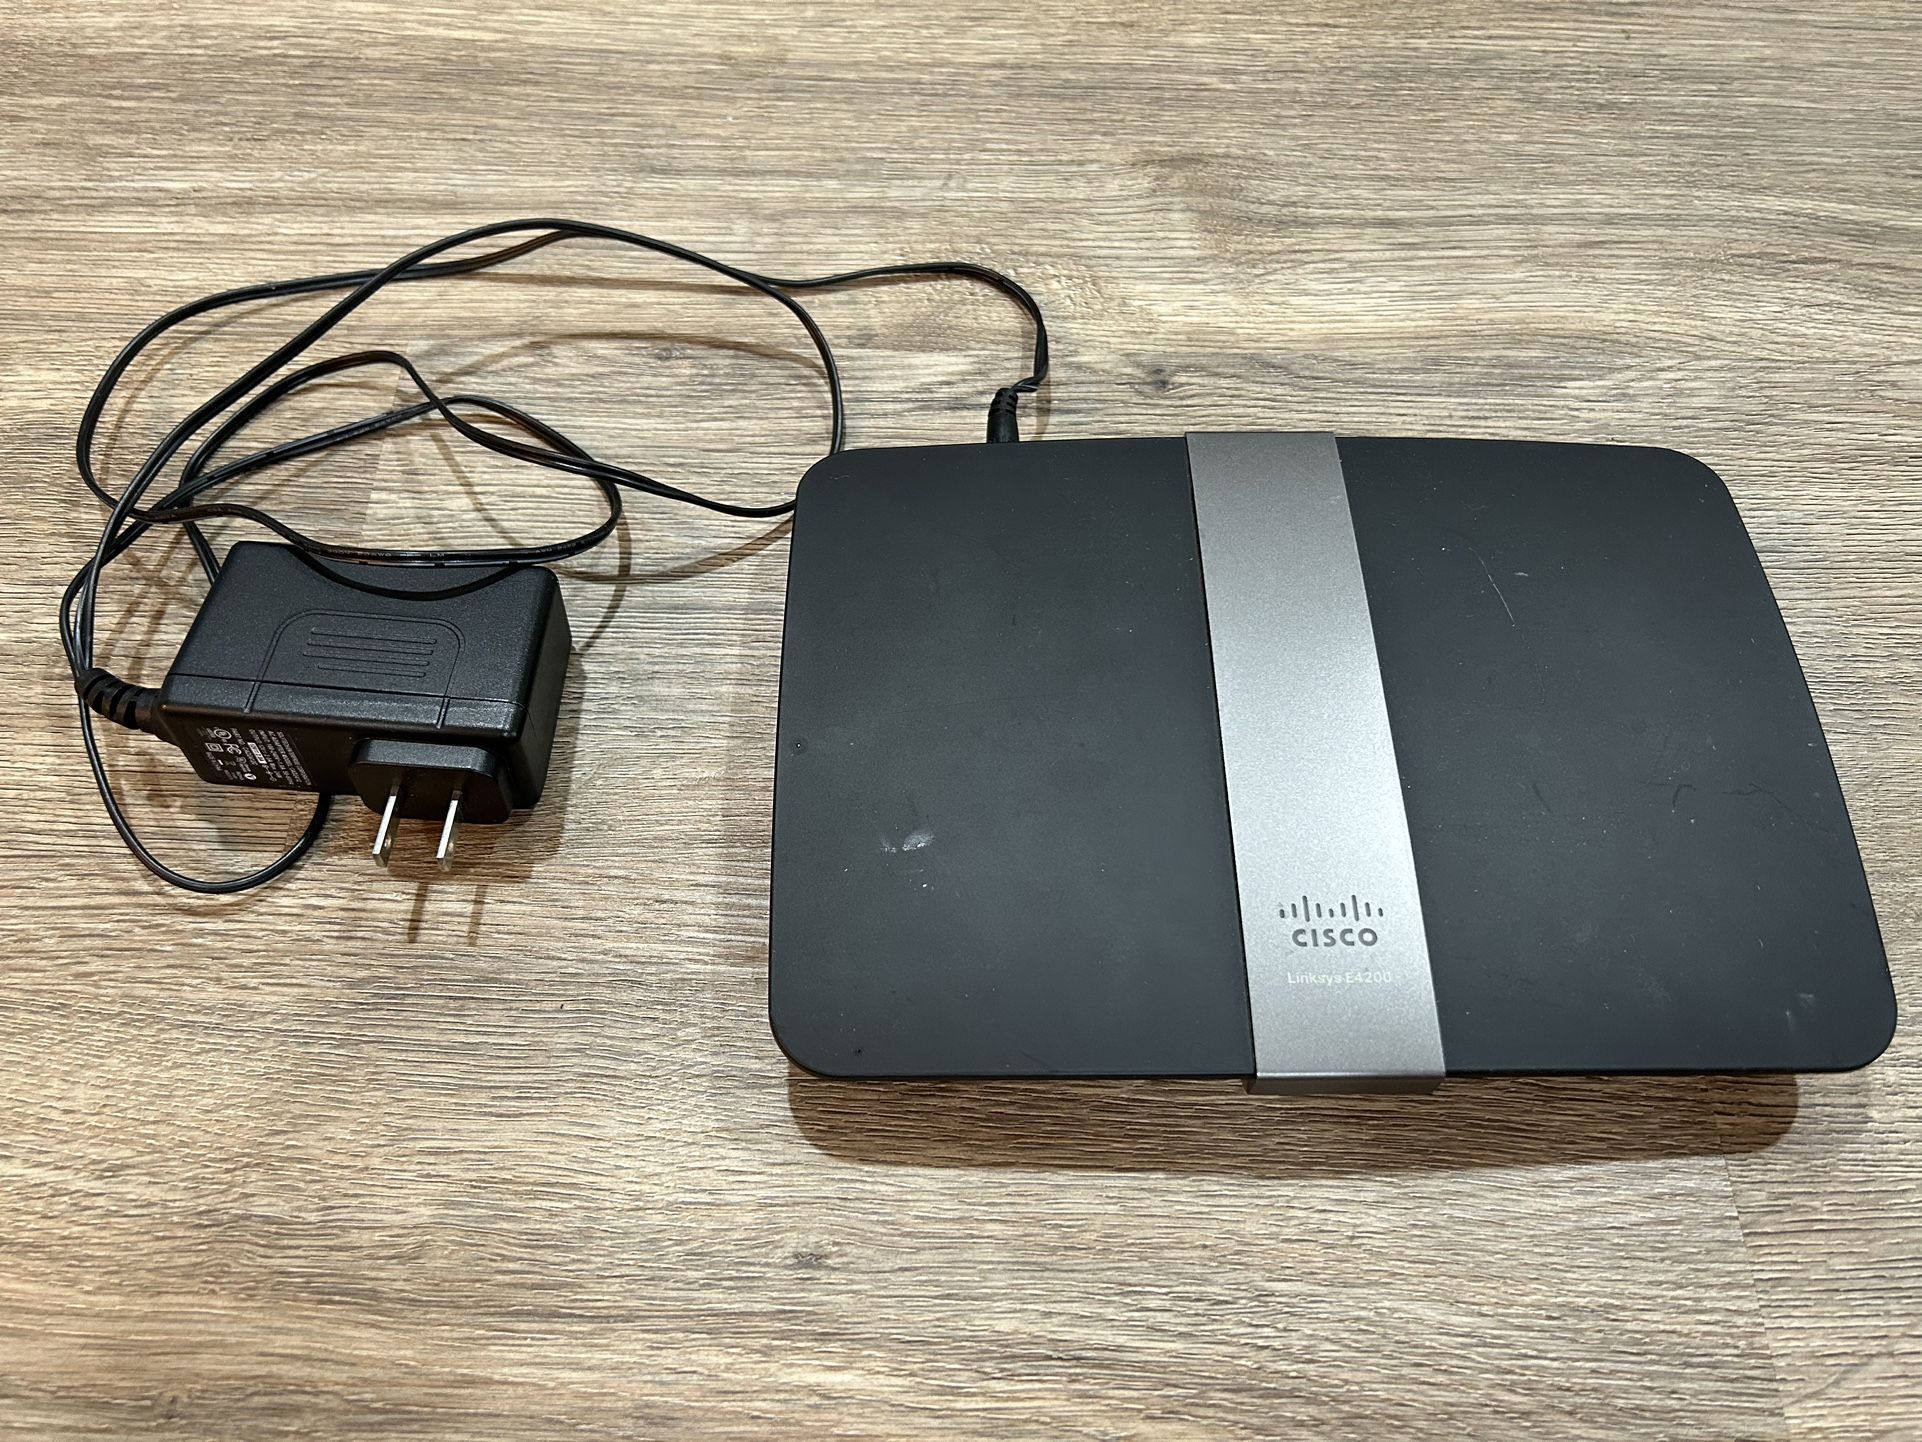 Cisco Linksys E4200 Wireless Router